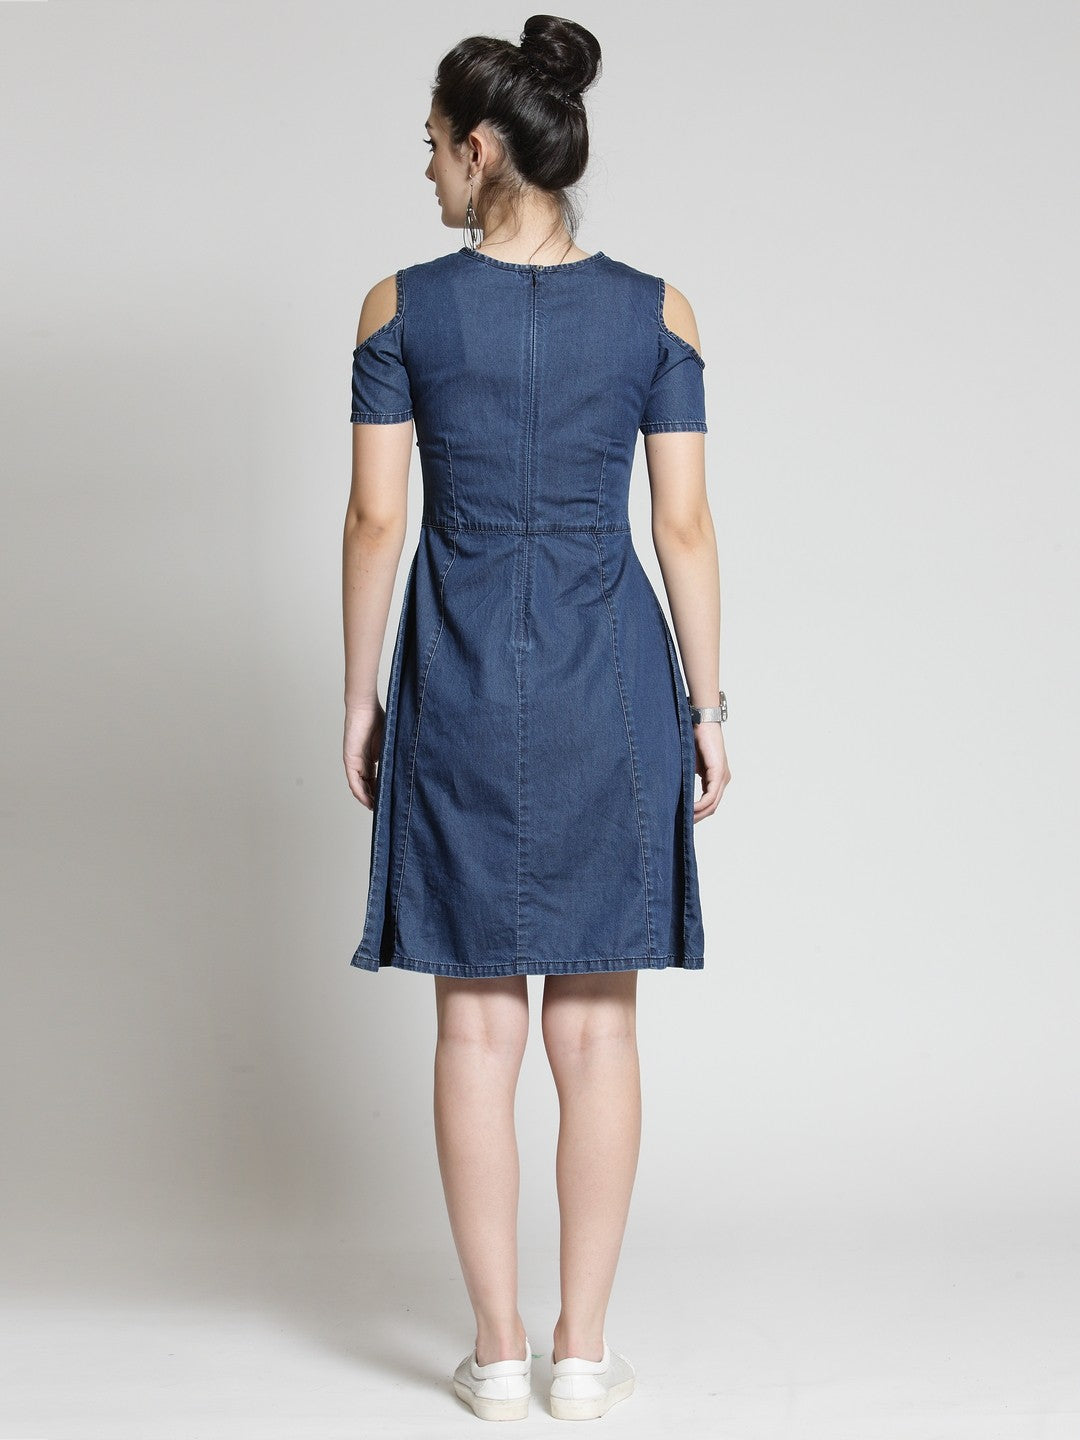 Blanco Blue Short Sleeve Side Zip/Buttons Soft Denim Fit & Flare Dress XS-S  VGC | eBay